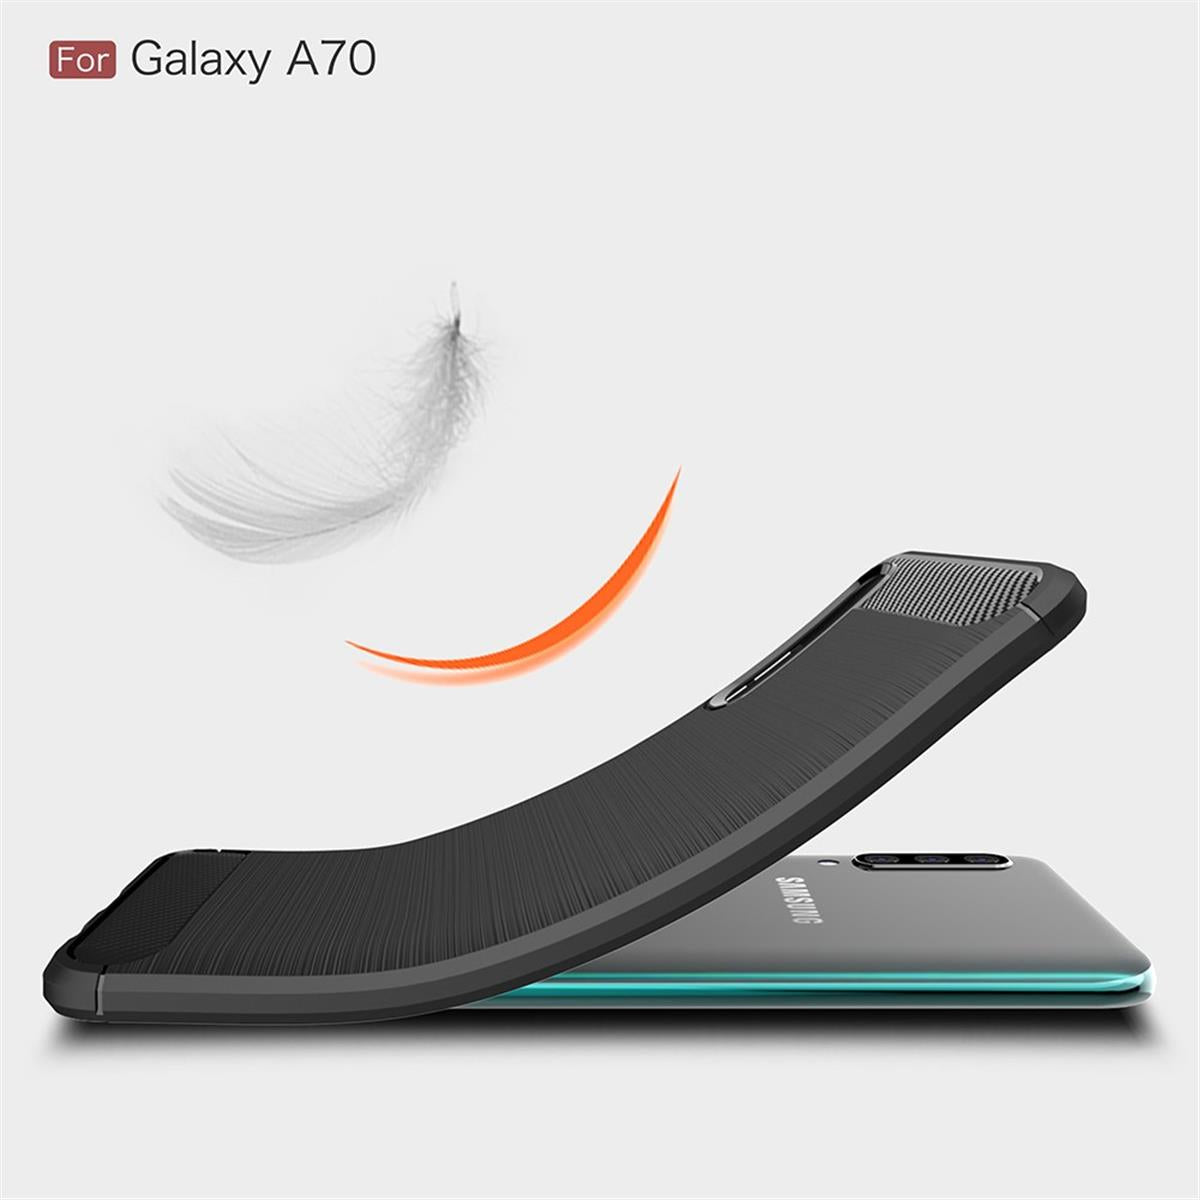 Hülle für Samsung Galaxy A70 Handyhülle Schutzhülle Silikon Case Carbon farben